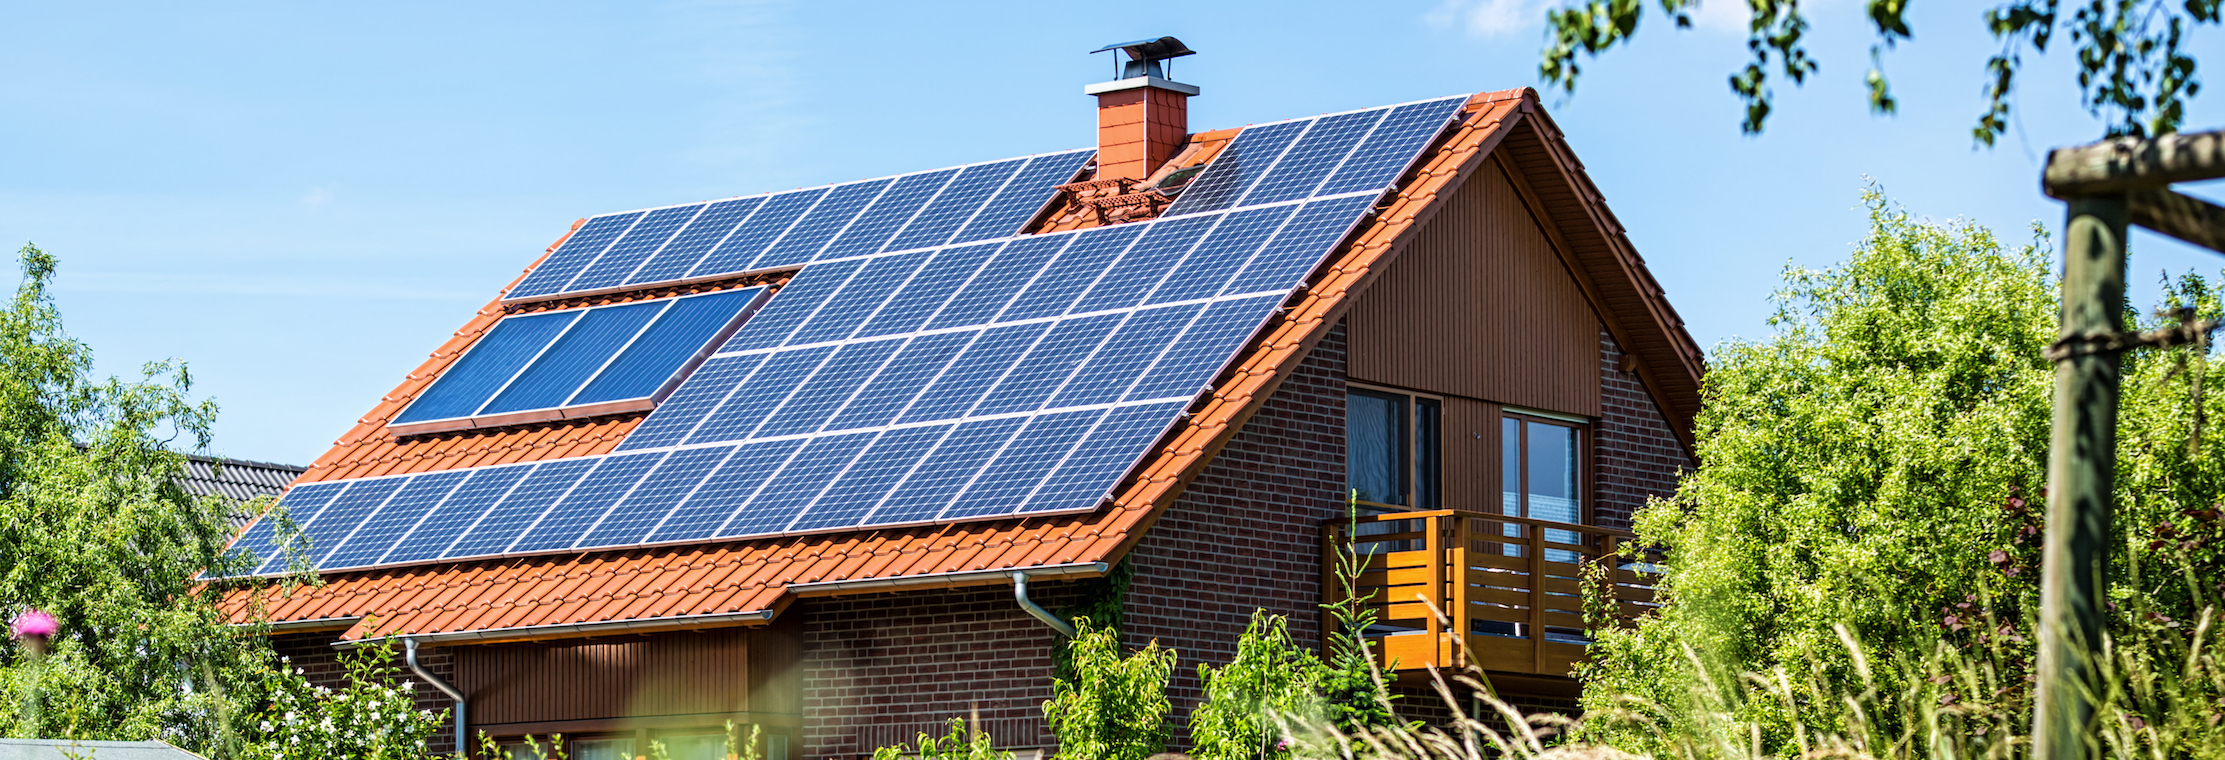 Solar panels on house in green field